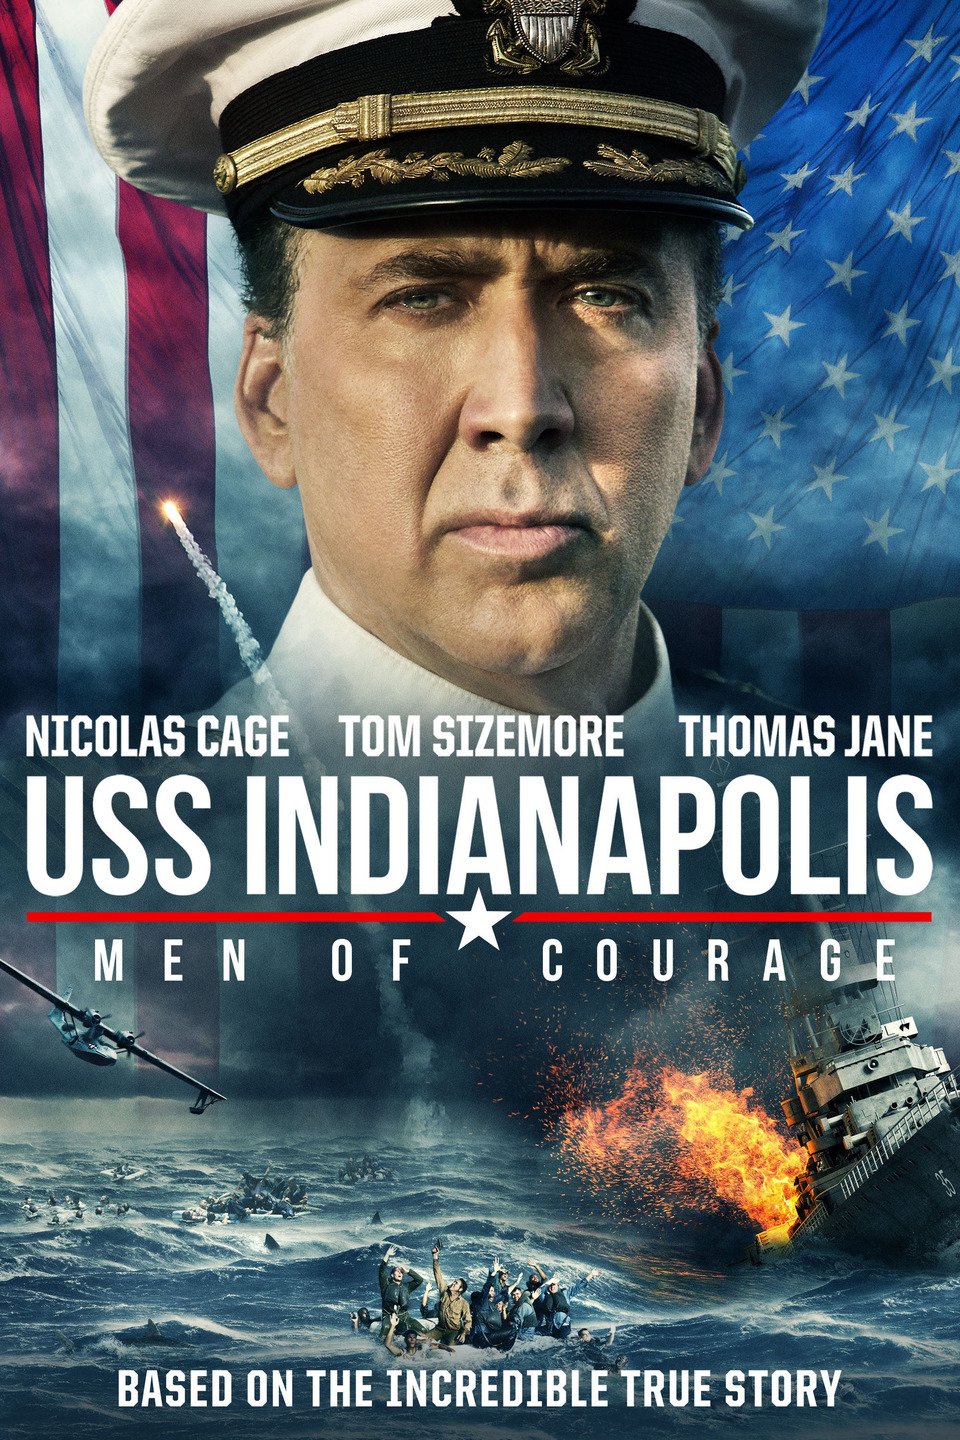 Stiahni si HD Filmy USS Indianapolis: Boj o přežití / USS Indianapolis: Men of Courage (2016)(CZ,EN)[HEVC][1080p]